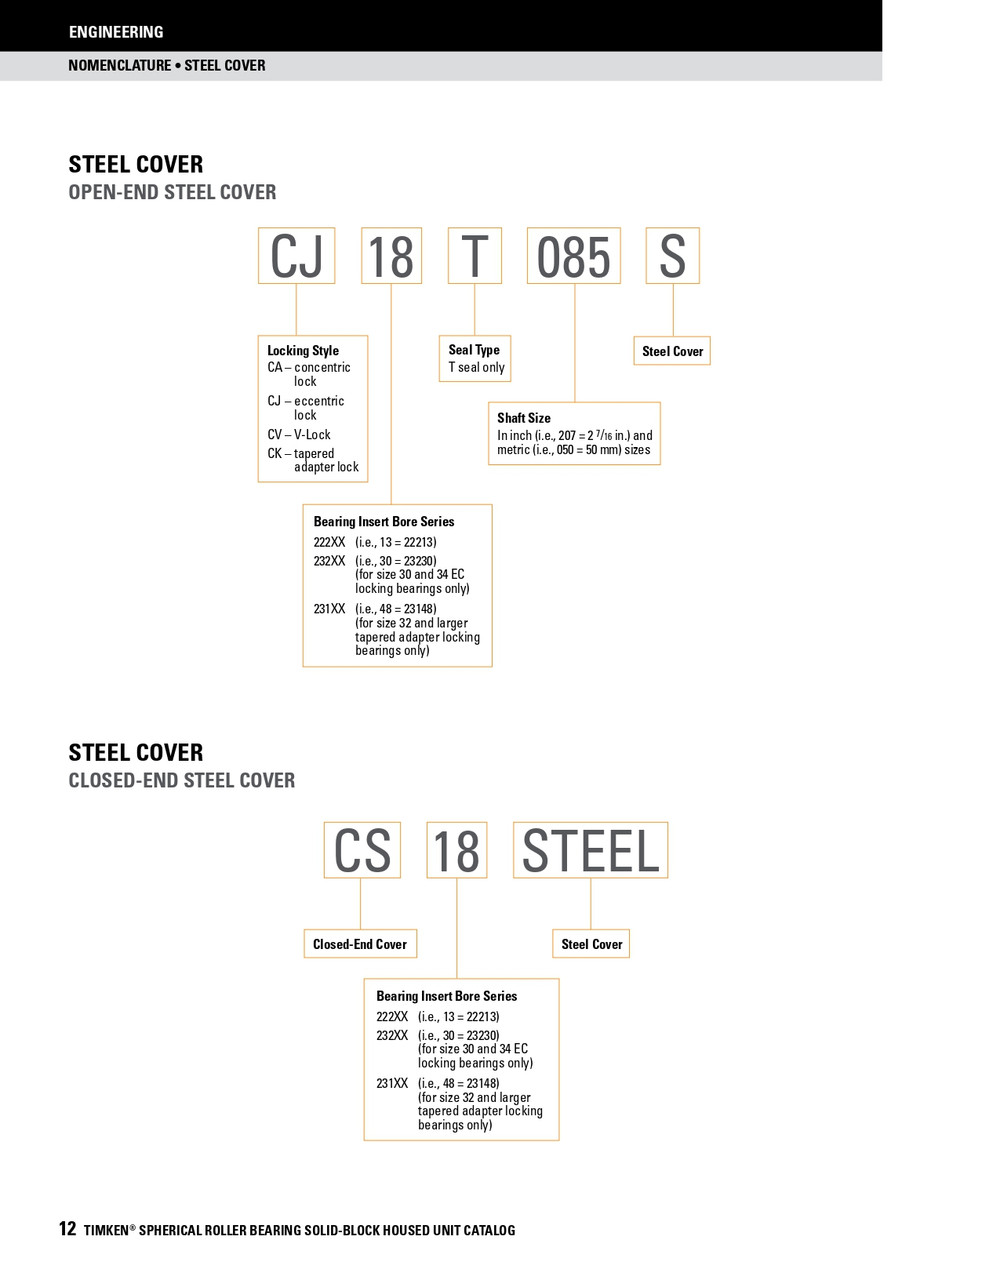 5" Timken SRB Steel Open End Cover w/Teflon Seal - QA Concentric Lock Type  CA26T500S